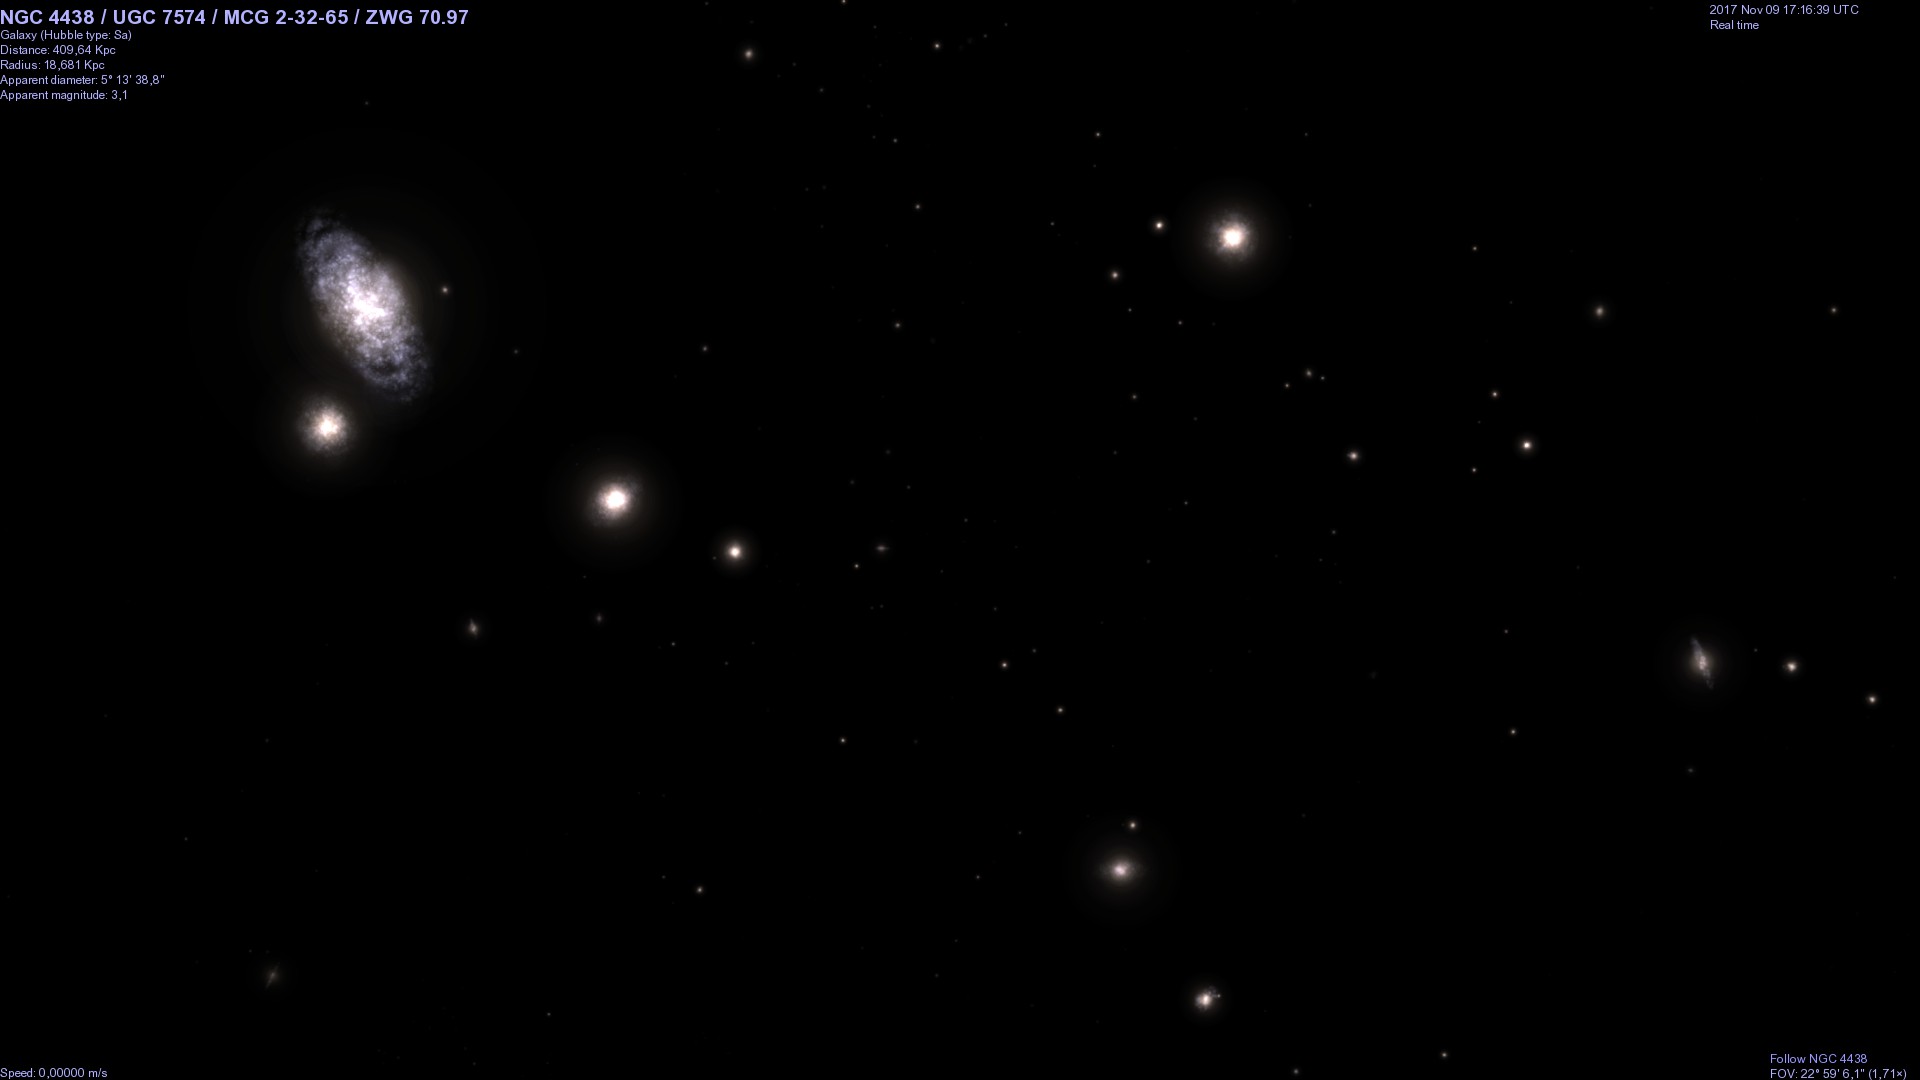 The Virgo Cluster of galaxies